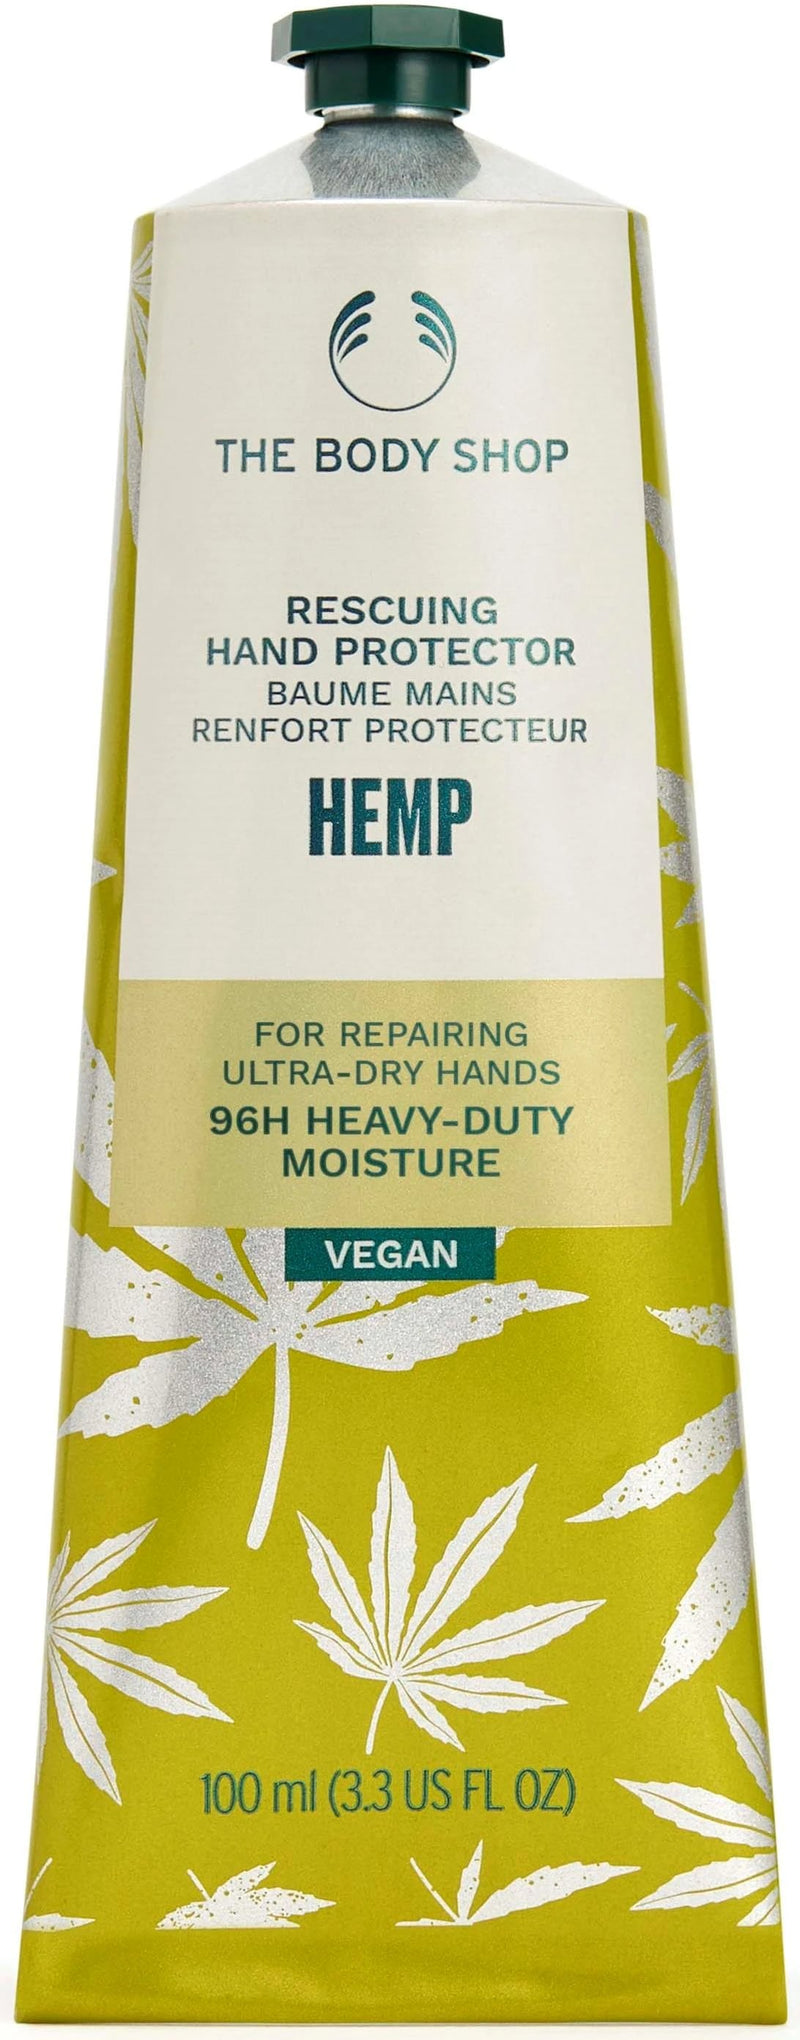 The Body Shop Hemp hand protector 100ml